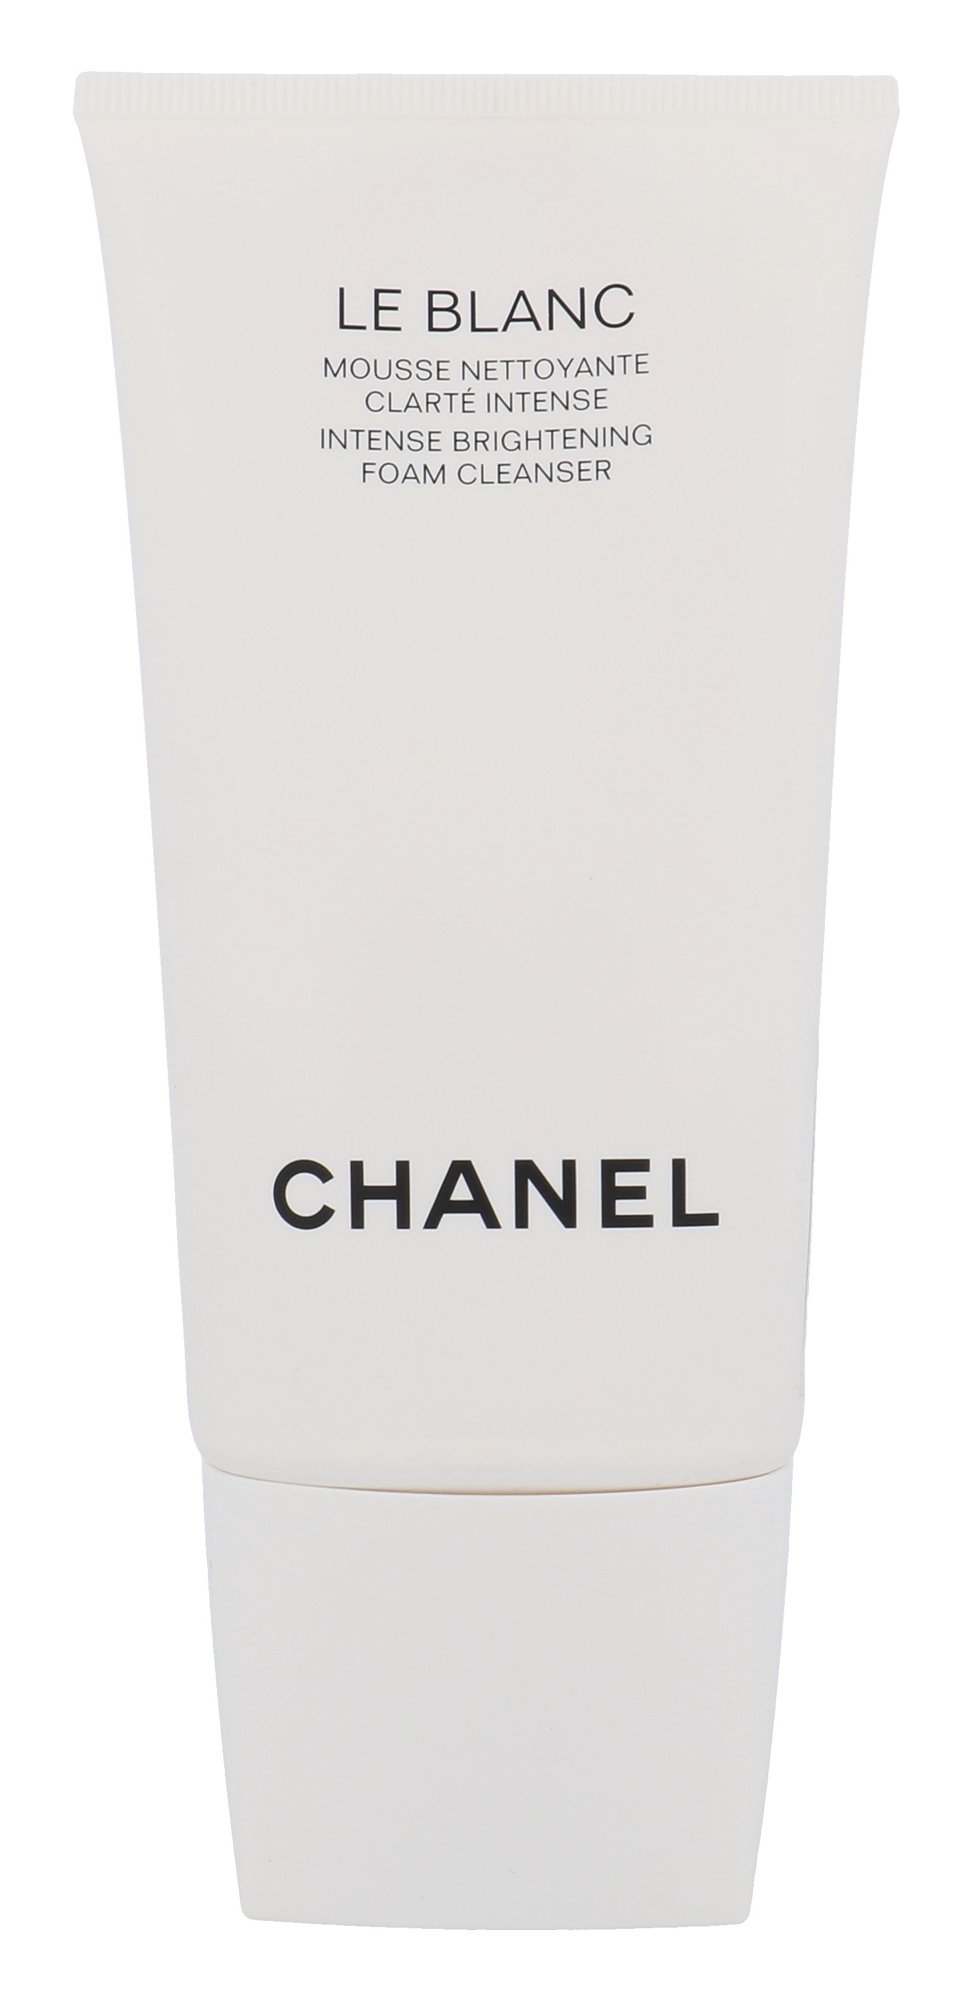 Chanel Le Blanc Intense Brightening veido putos